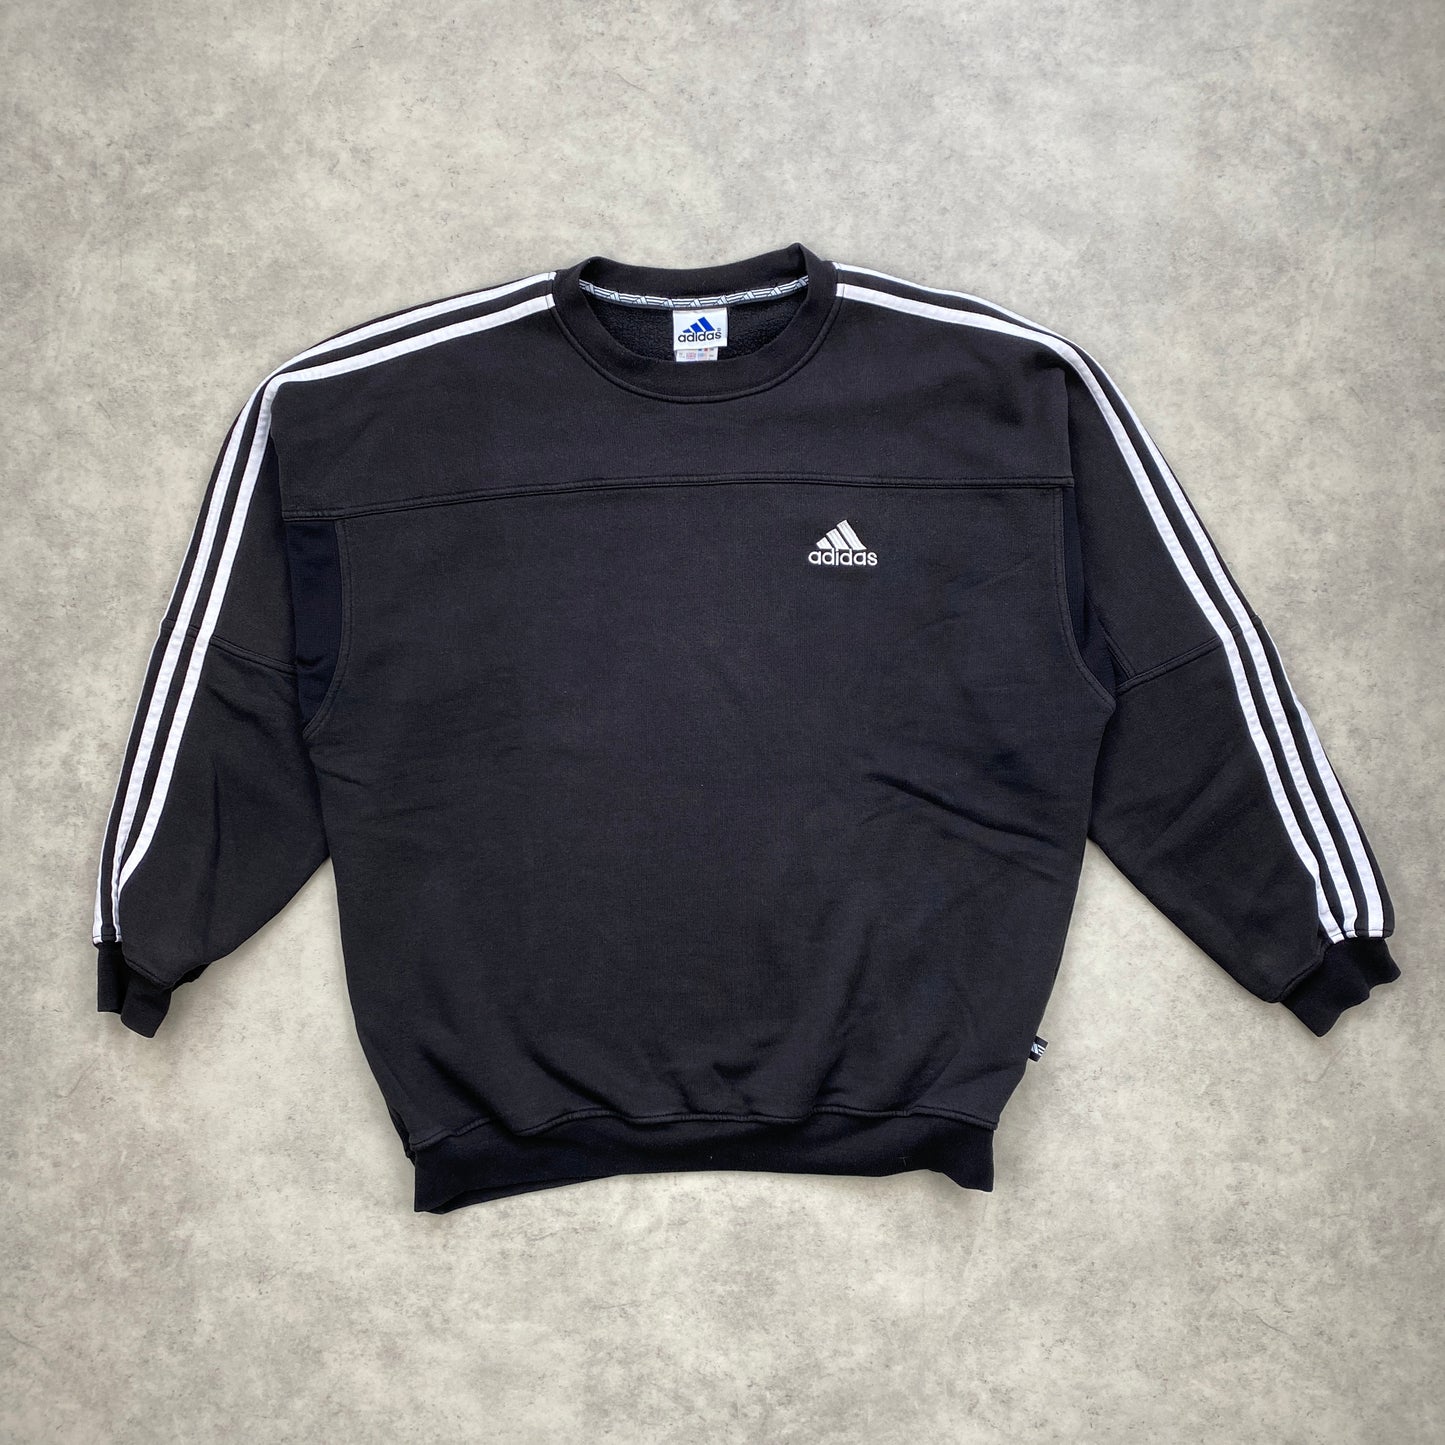 Adidas heavyweight sweater (L)